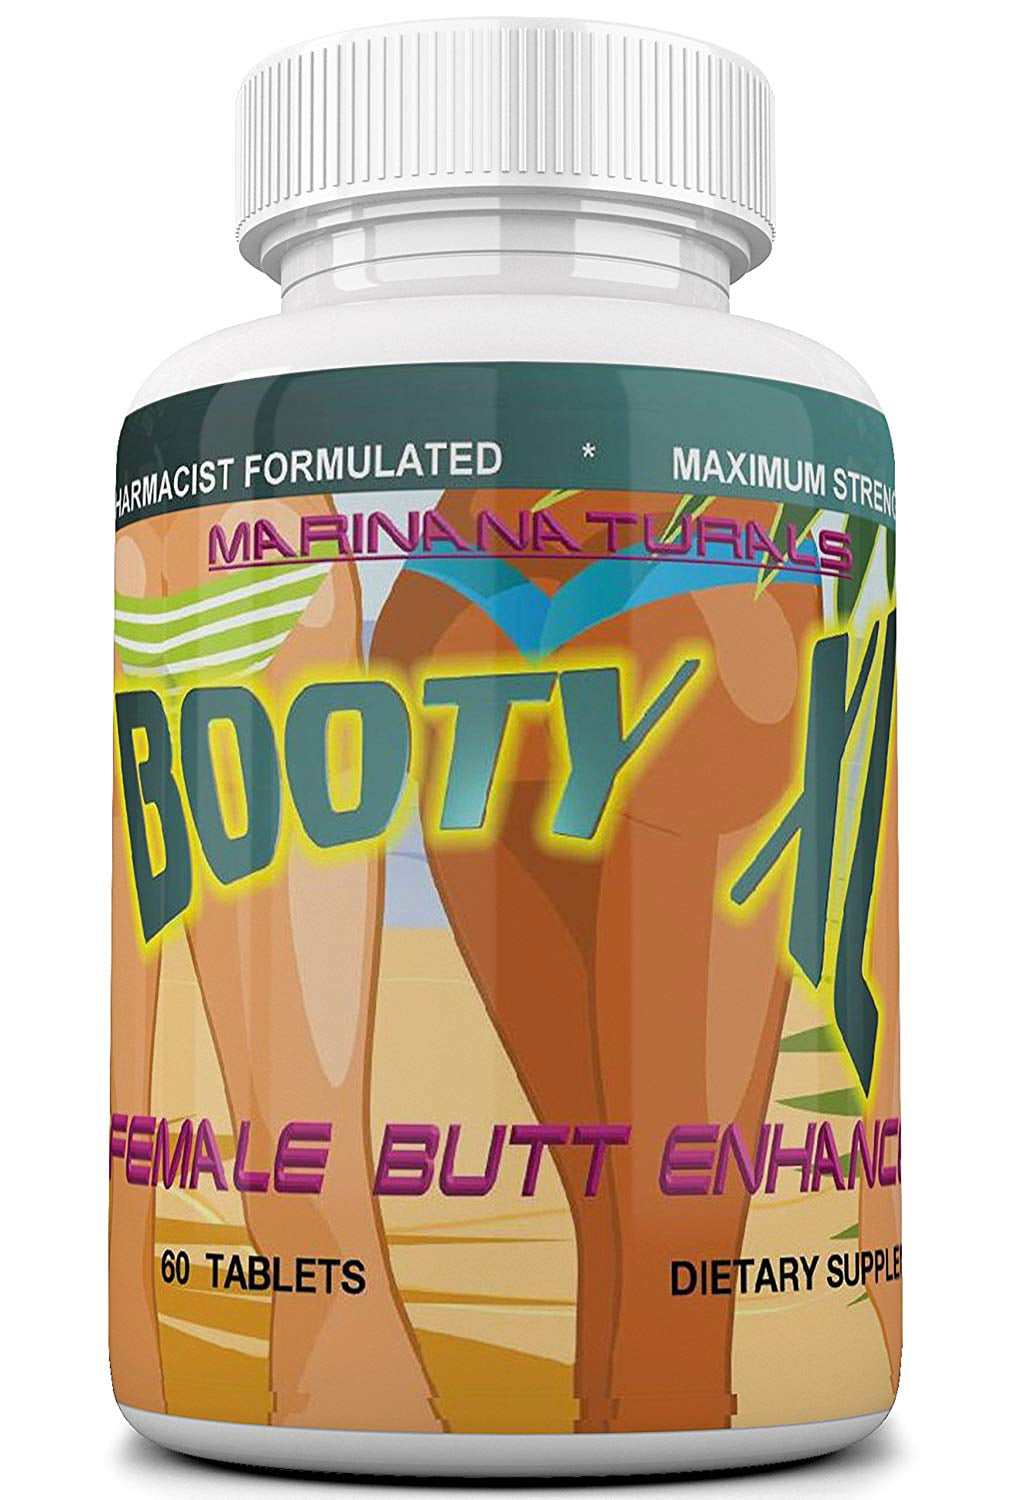 Best Female Butt